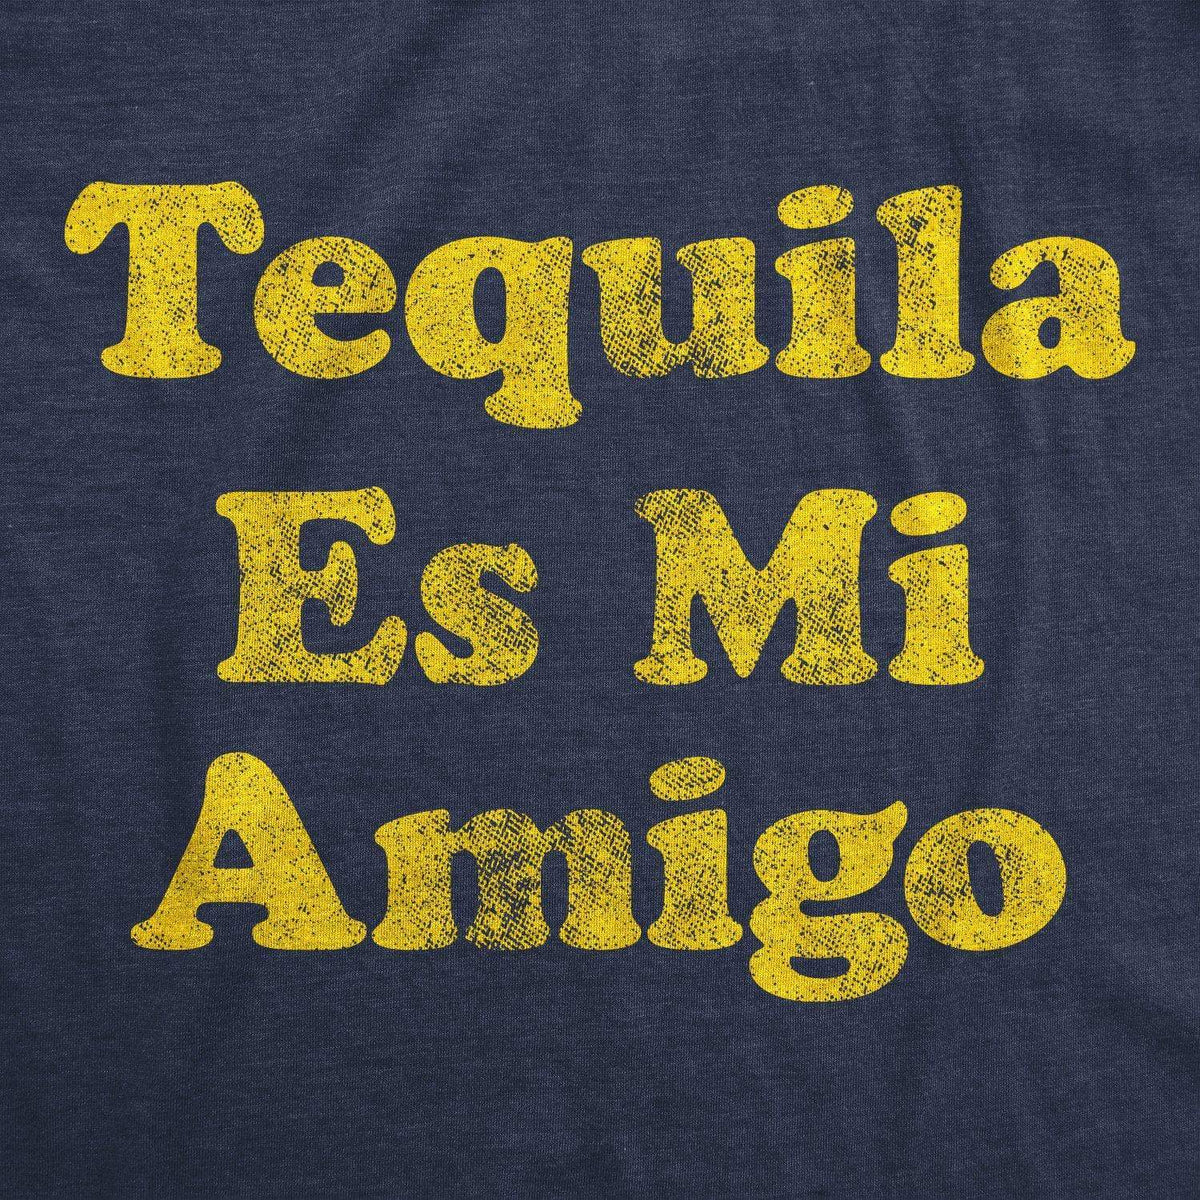 Tequila Es Mi Amigo Women&#39;s Tshirt  -  Crazy Dog T-Shirts